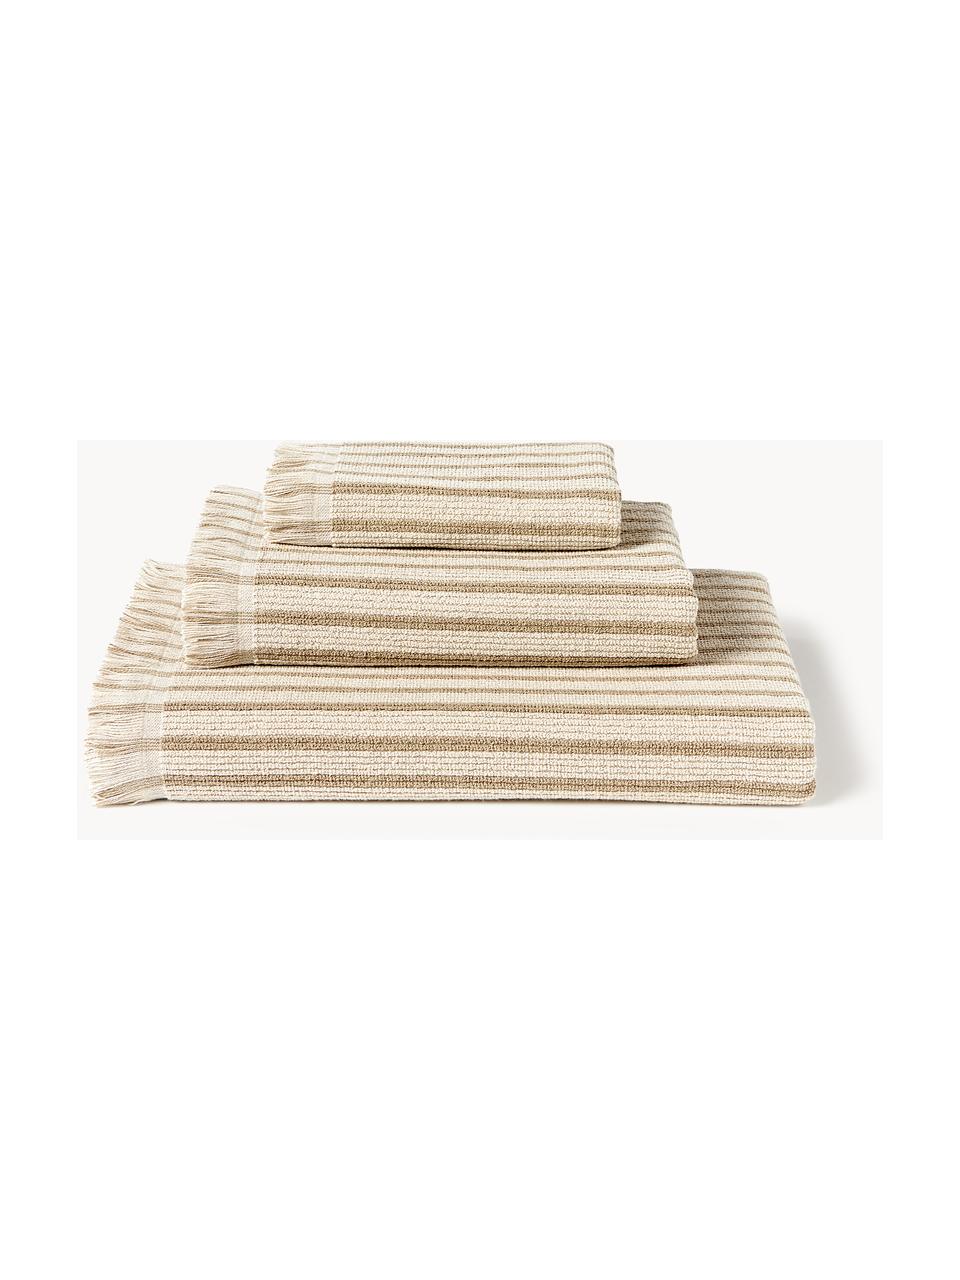 Set de toallas Irma, tamaños diferentes, Beige, Set de 4 (toallas lavabo y toallas ducha)